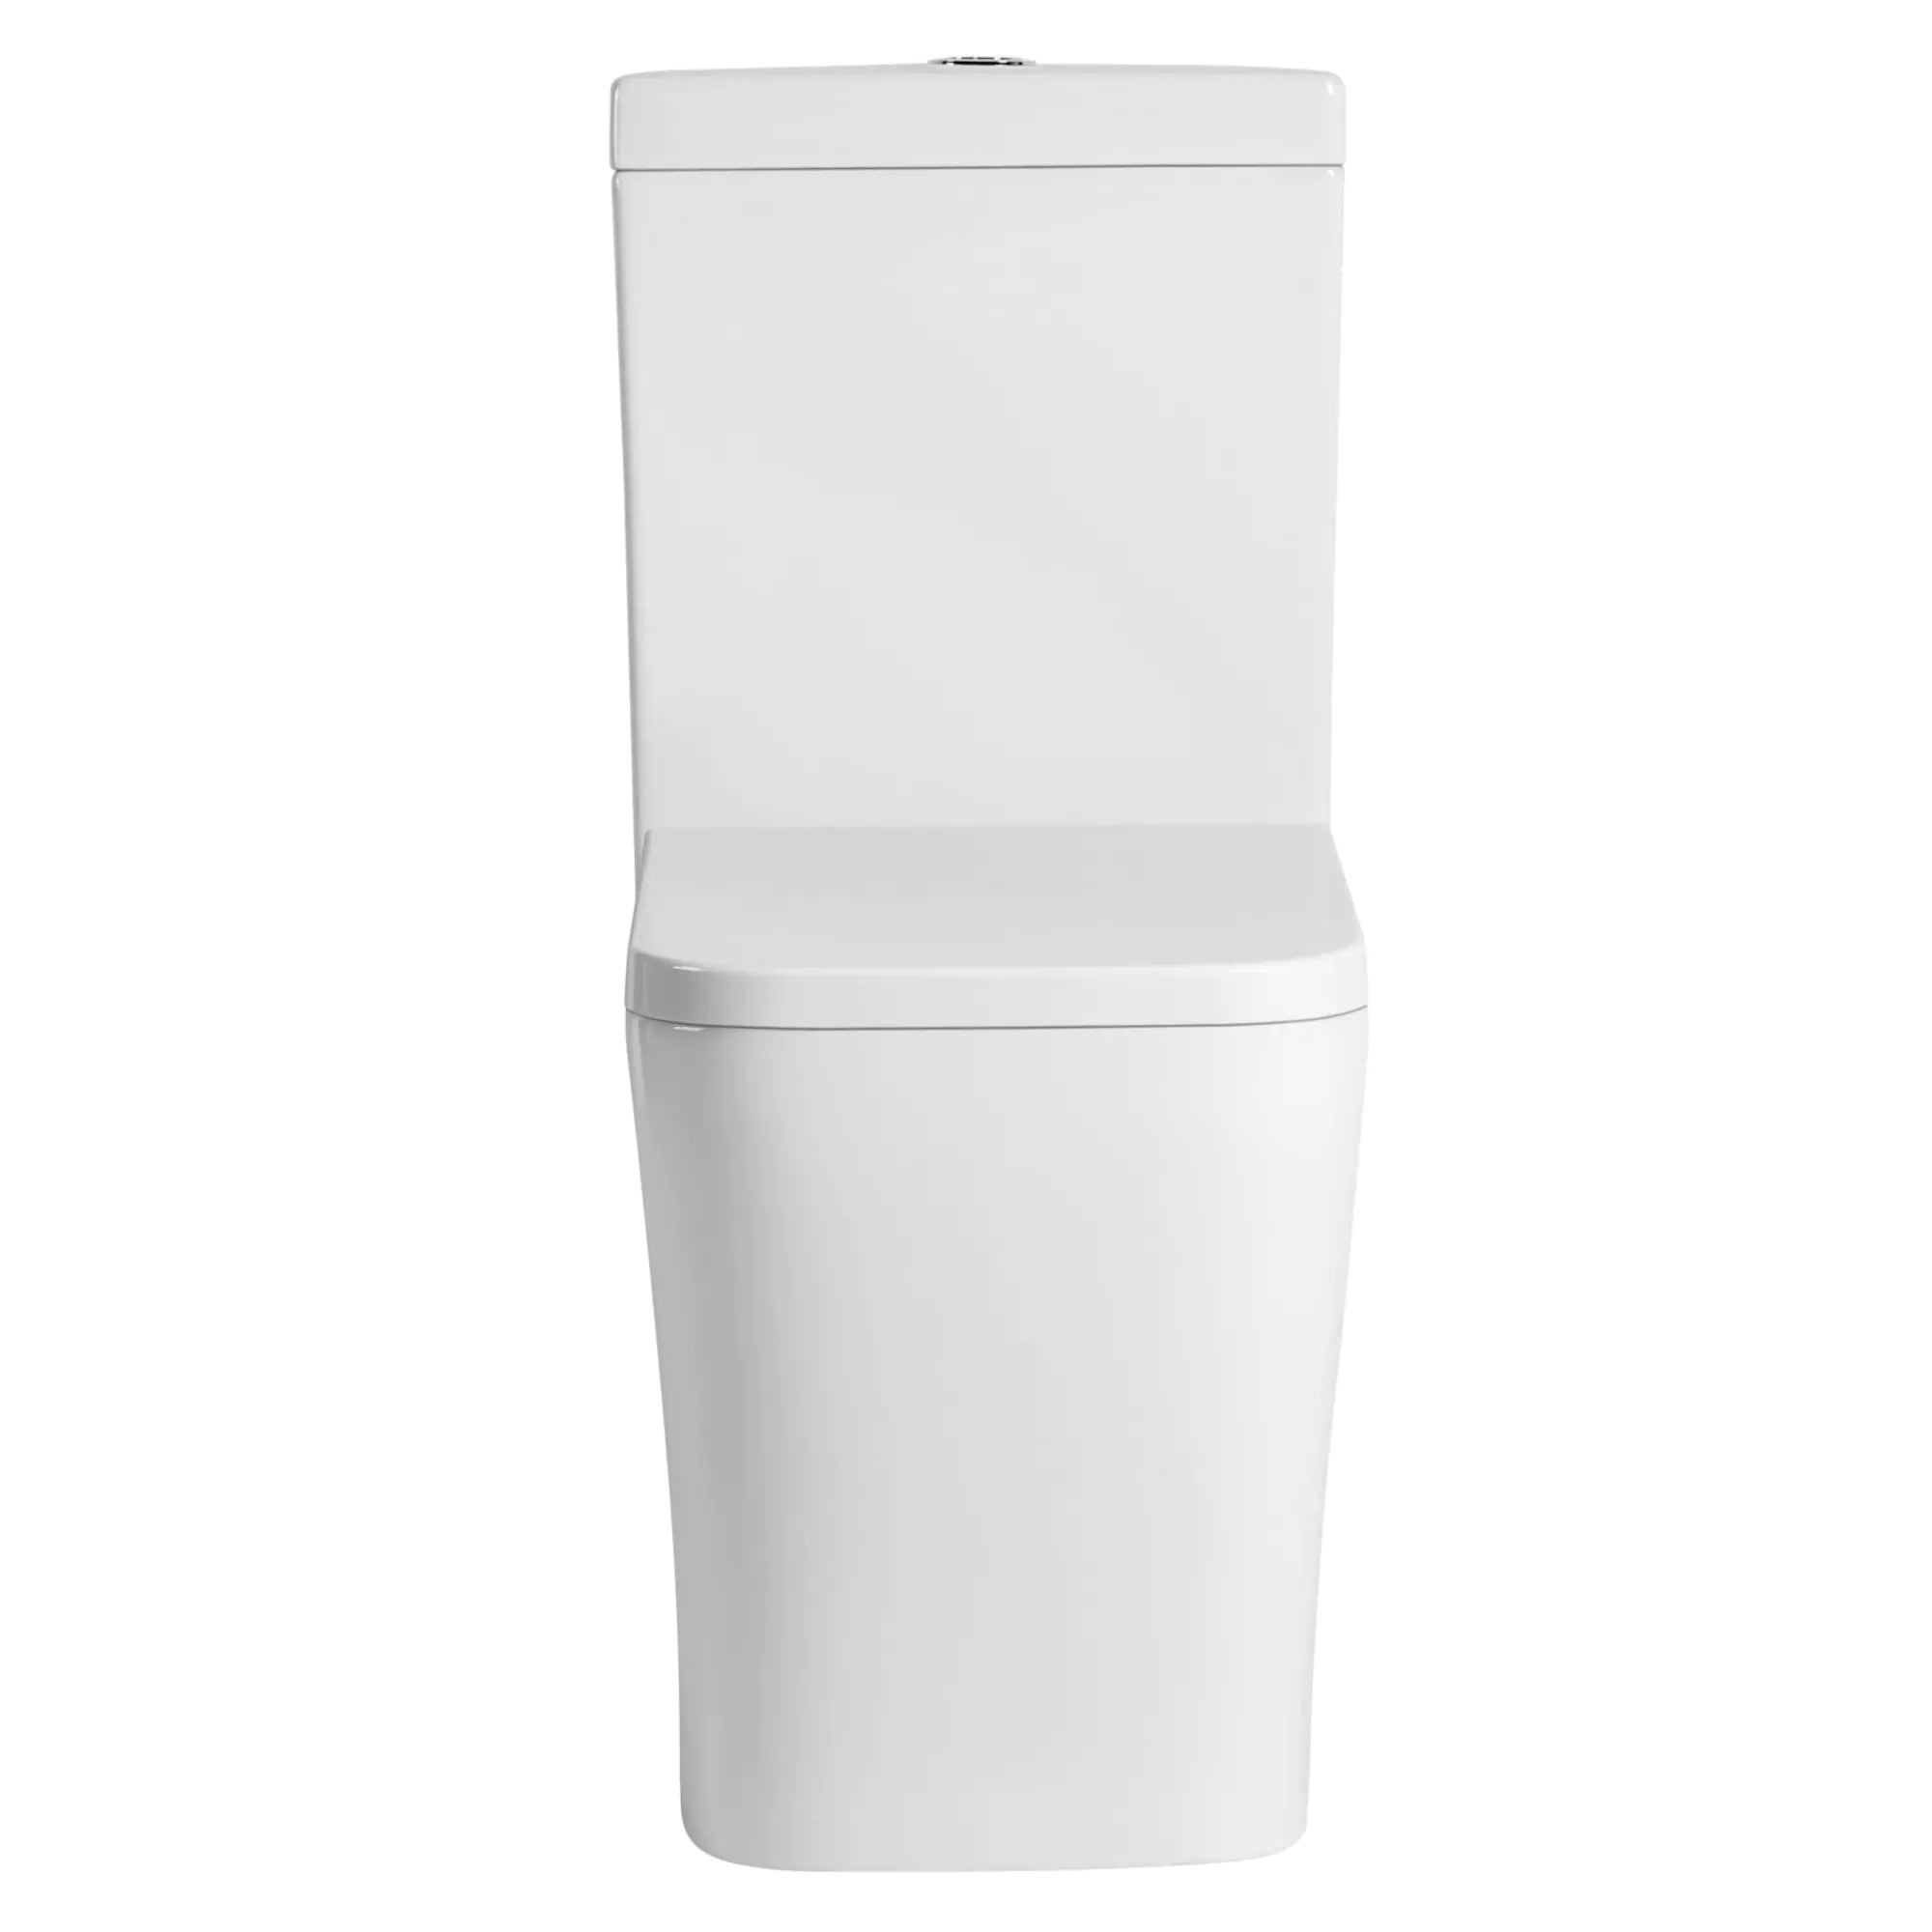 Qubist BTW Toilet Suite:Sleek Modern Bathroom Fixture KDK003-2